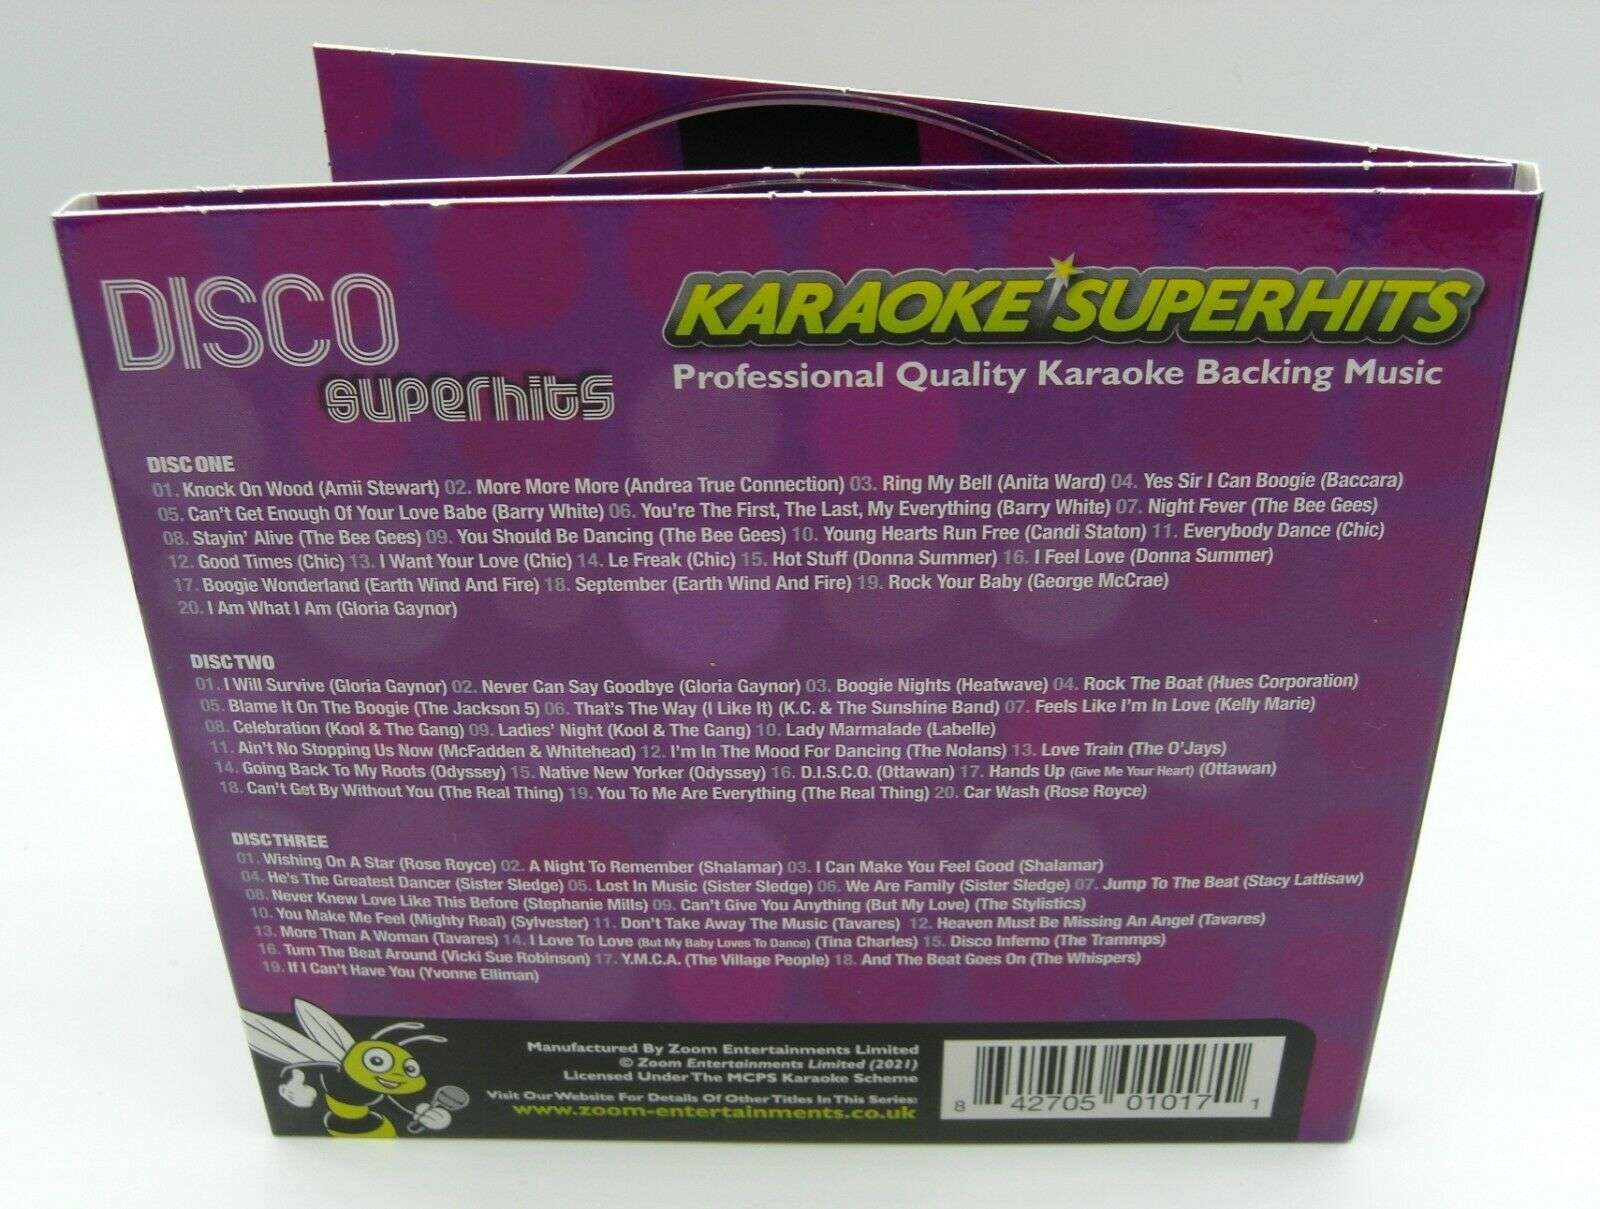 Zoom Karaoke - Disco Superhits Box Set